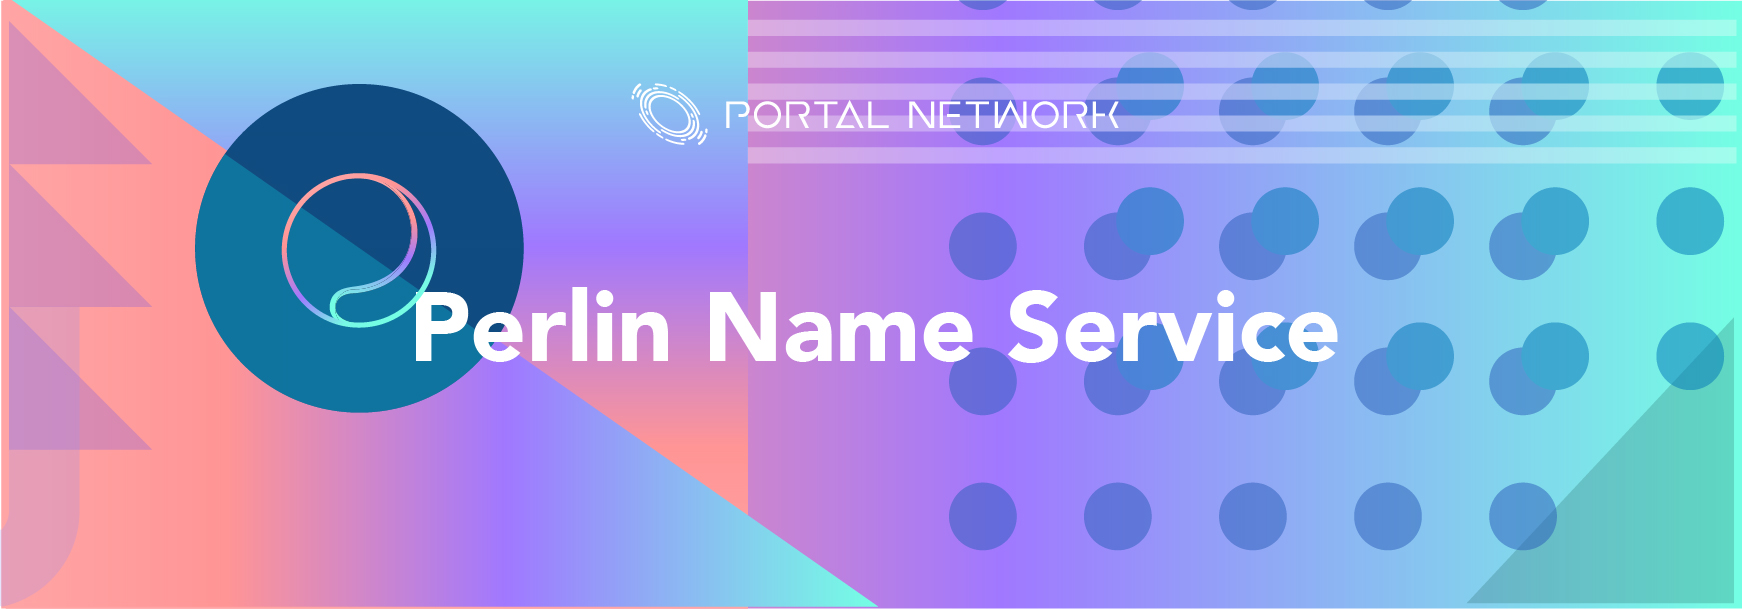 Perlin Name Service